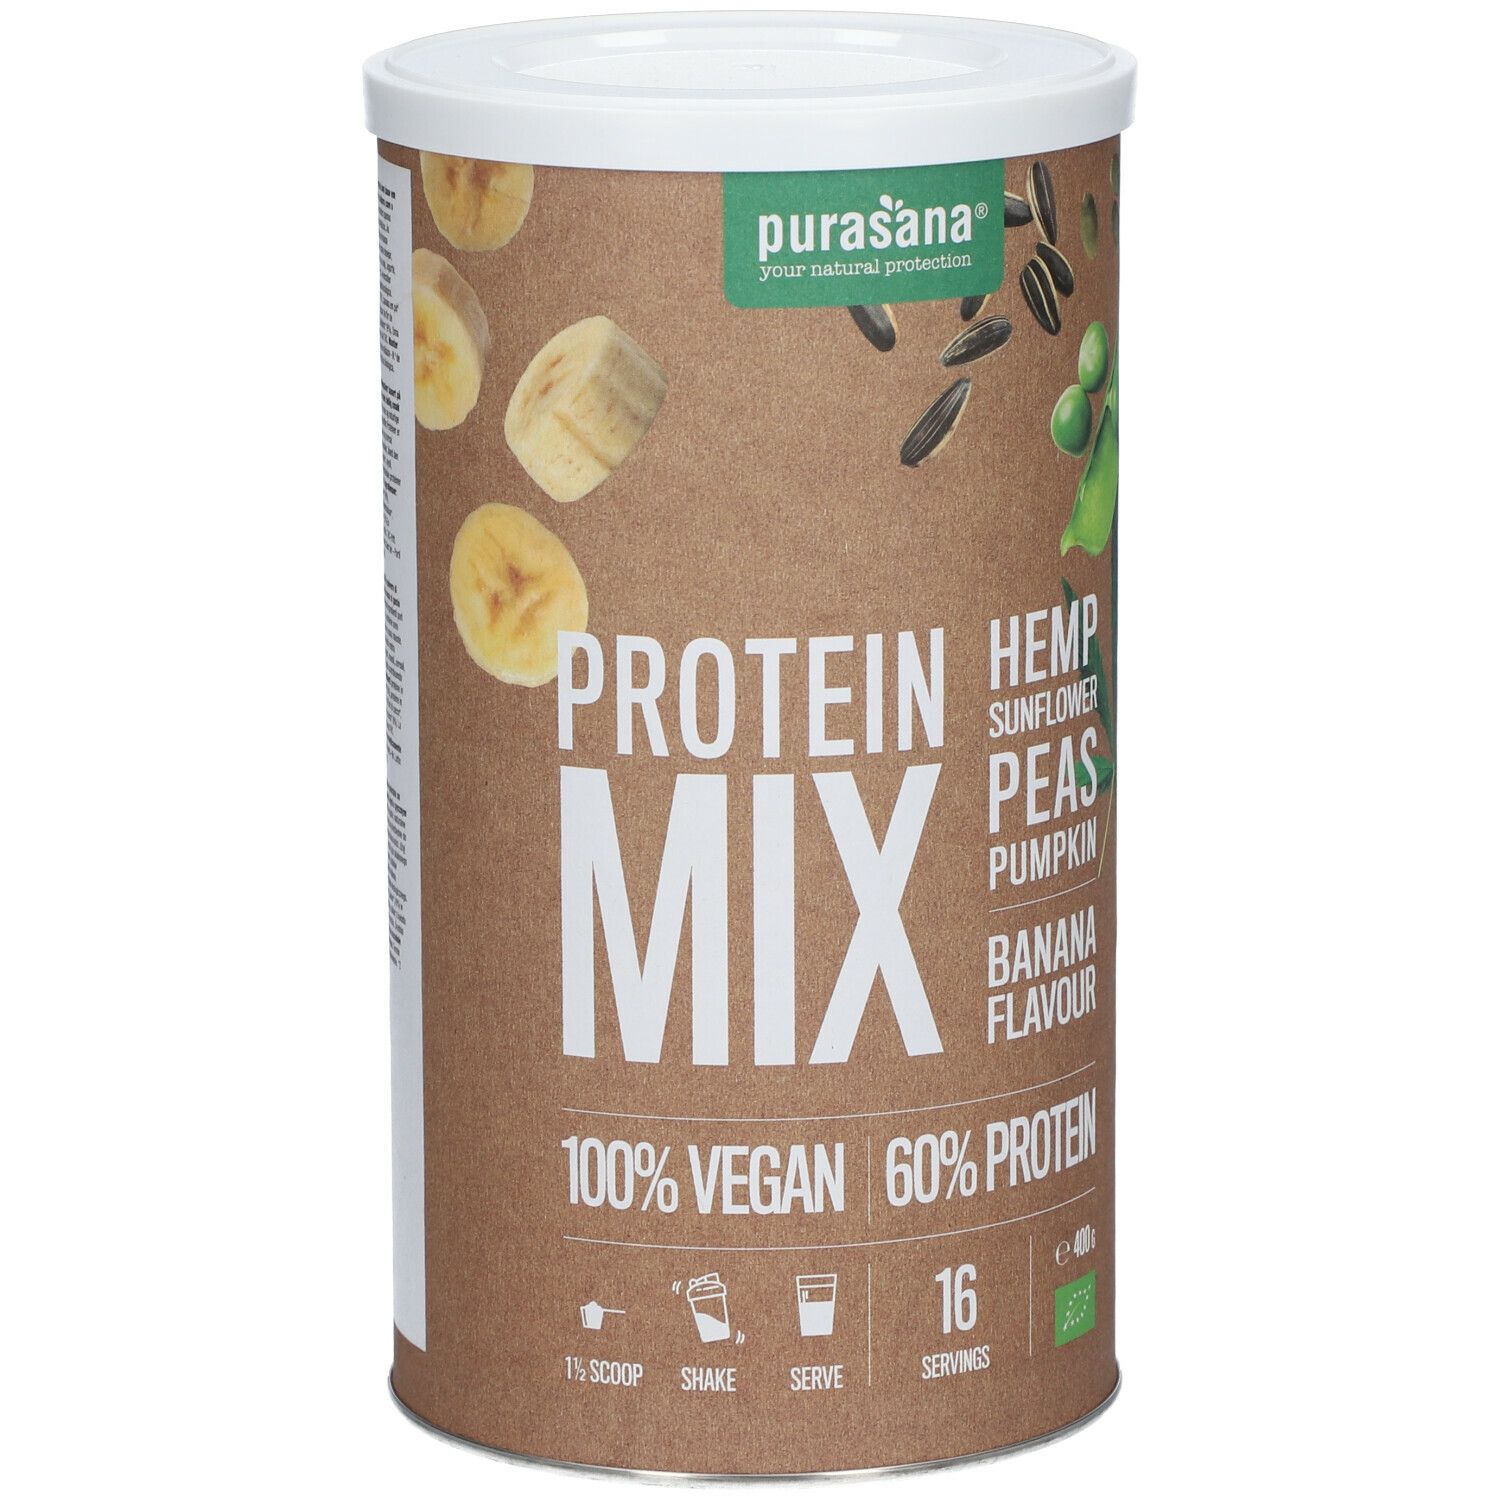 Purasana® Vegan Protein Mix Hemp Sunflower Peas Pumpkin Banana Bio